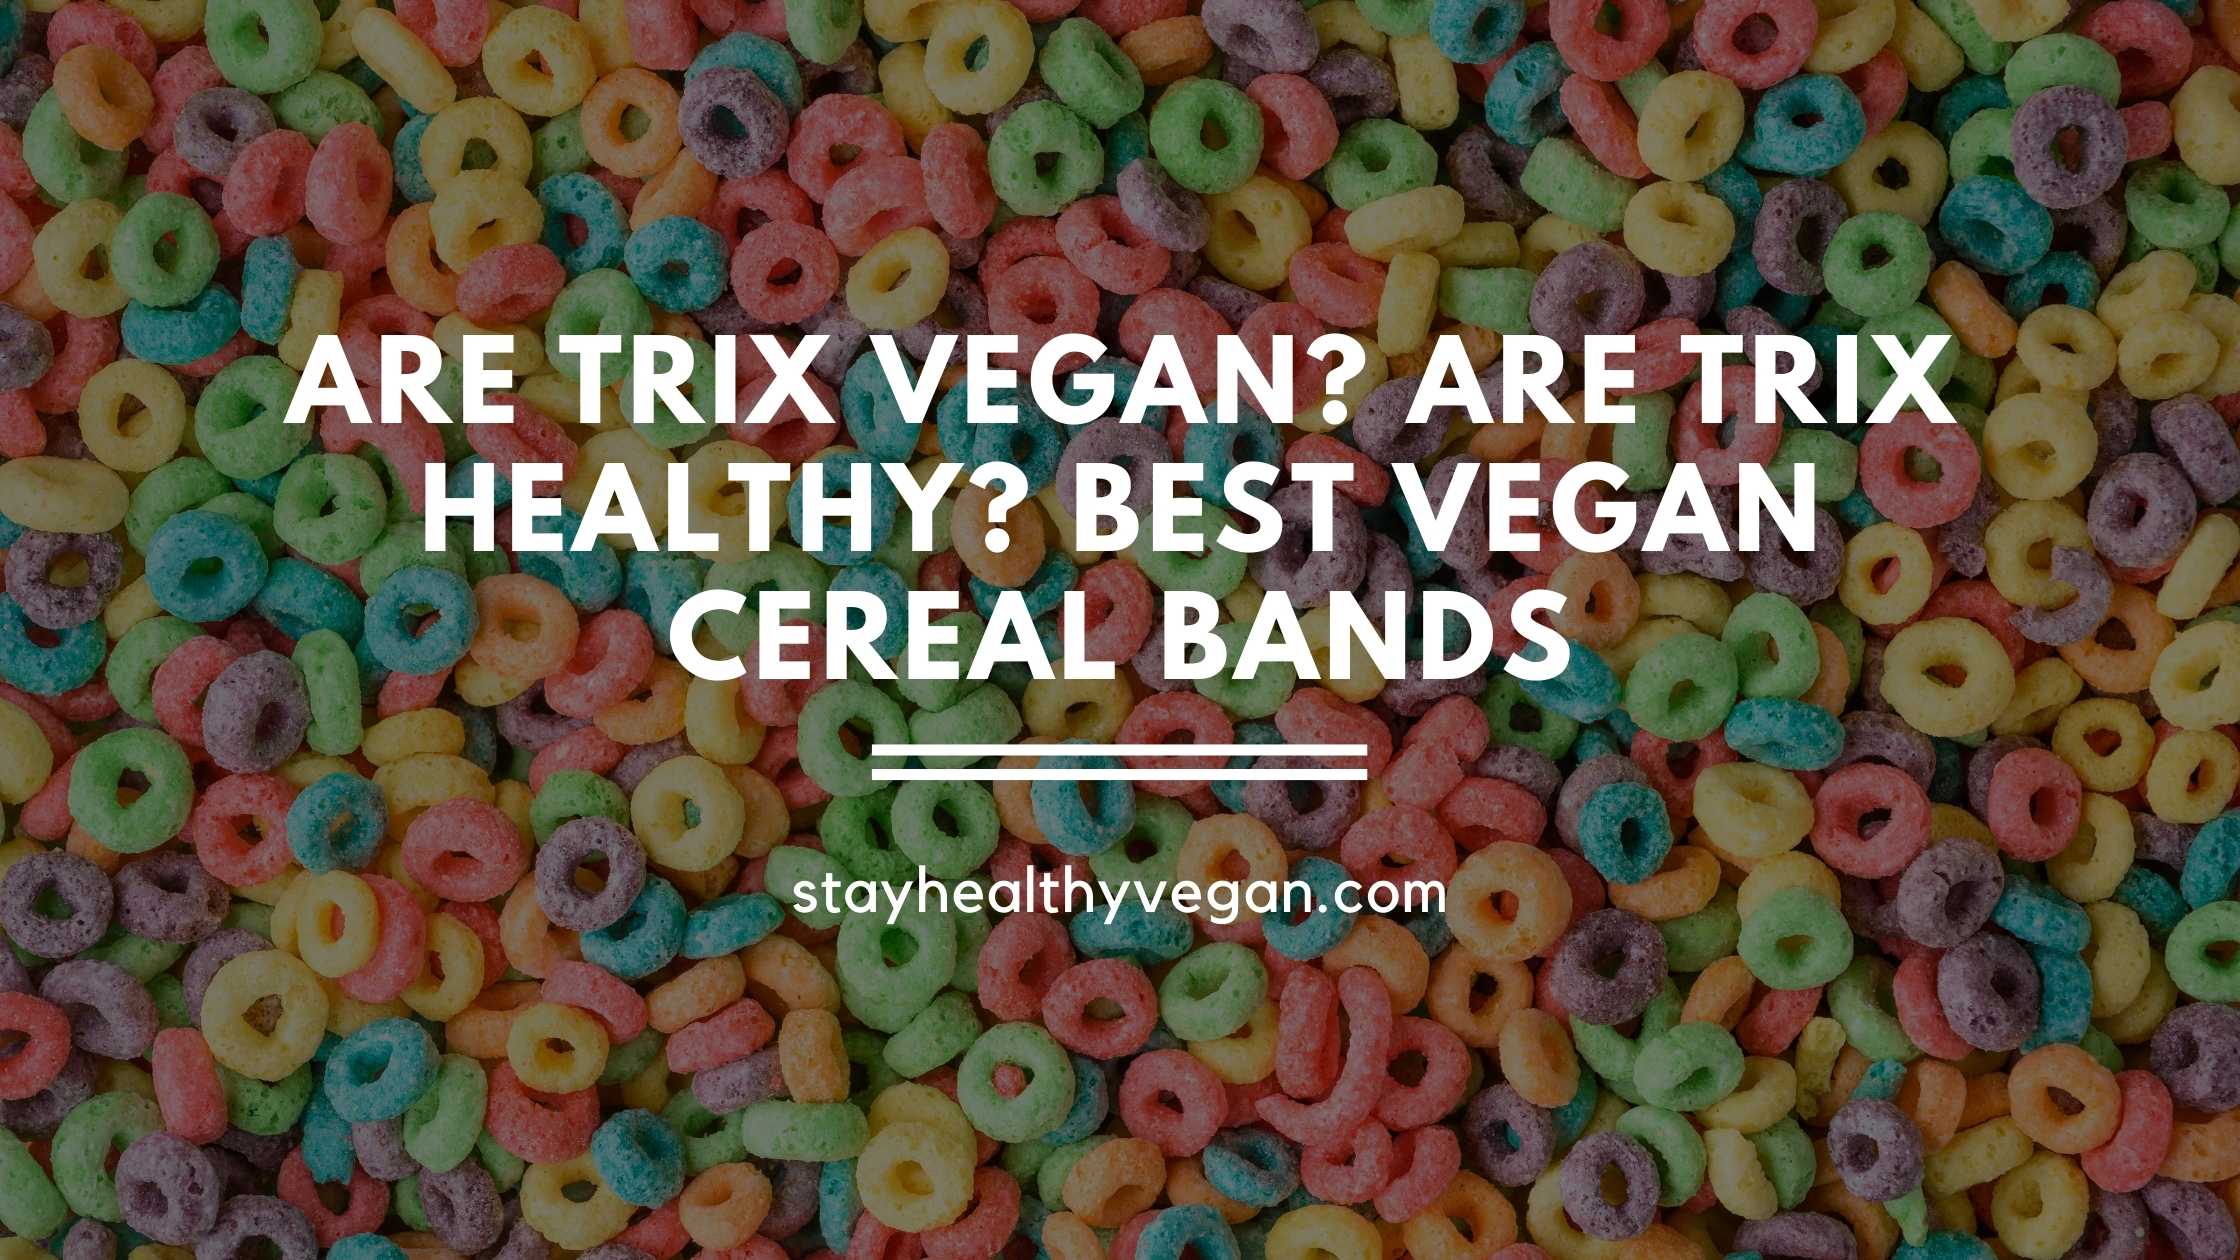 Are Trix Vegan? Are Trix healthy? Best vegan cereal bands